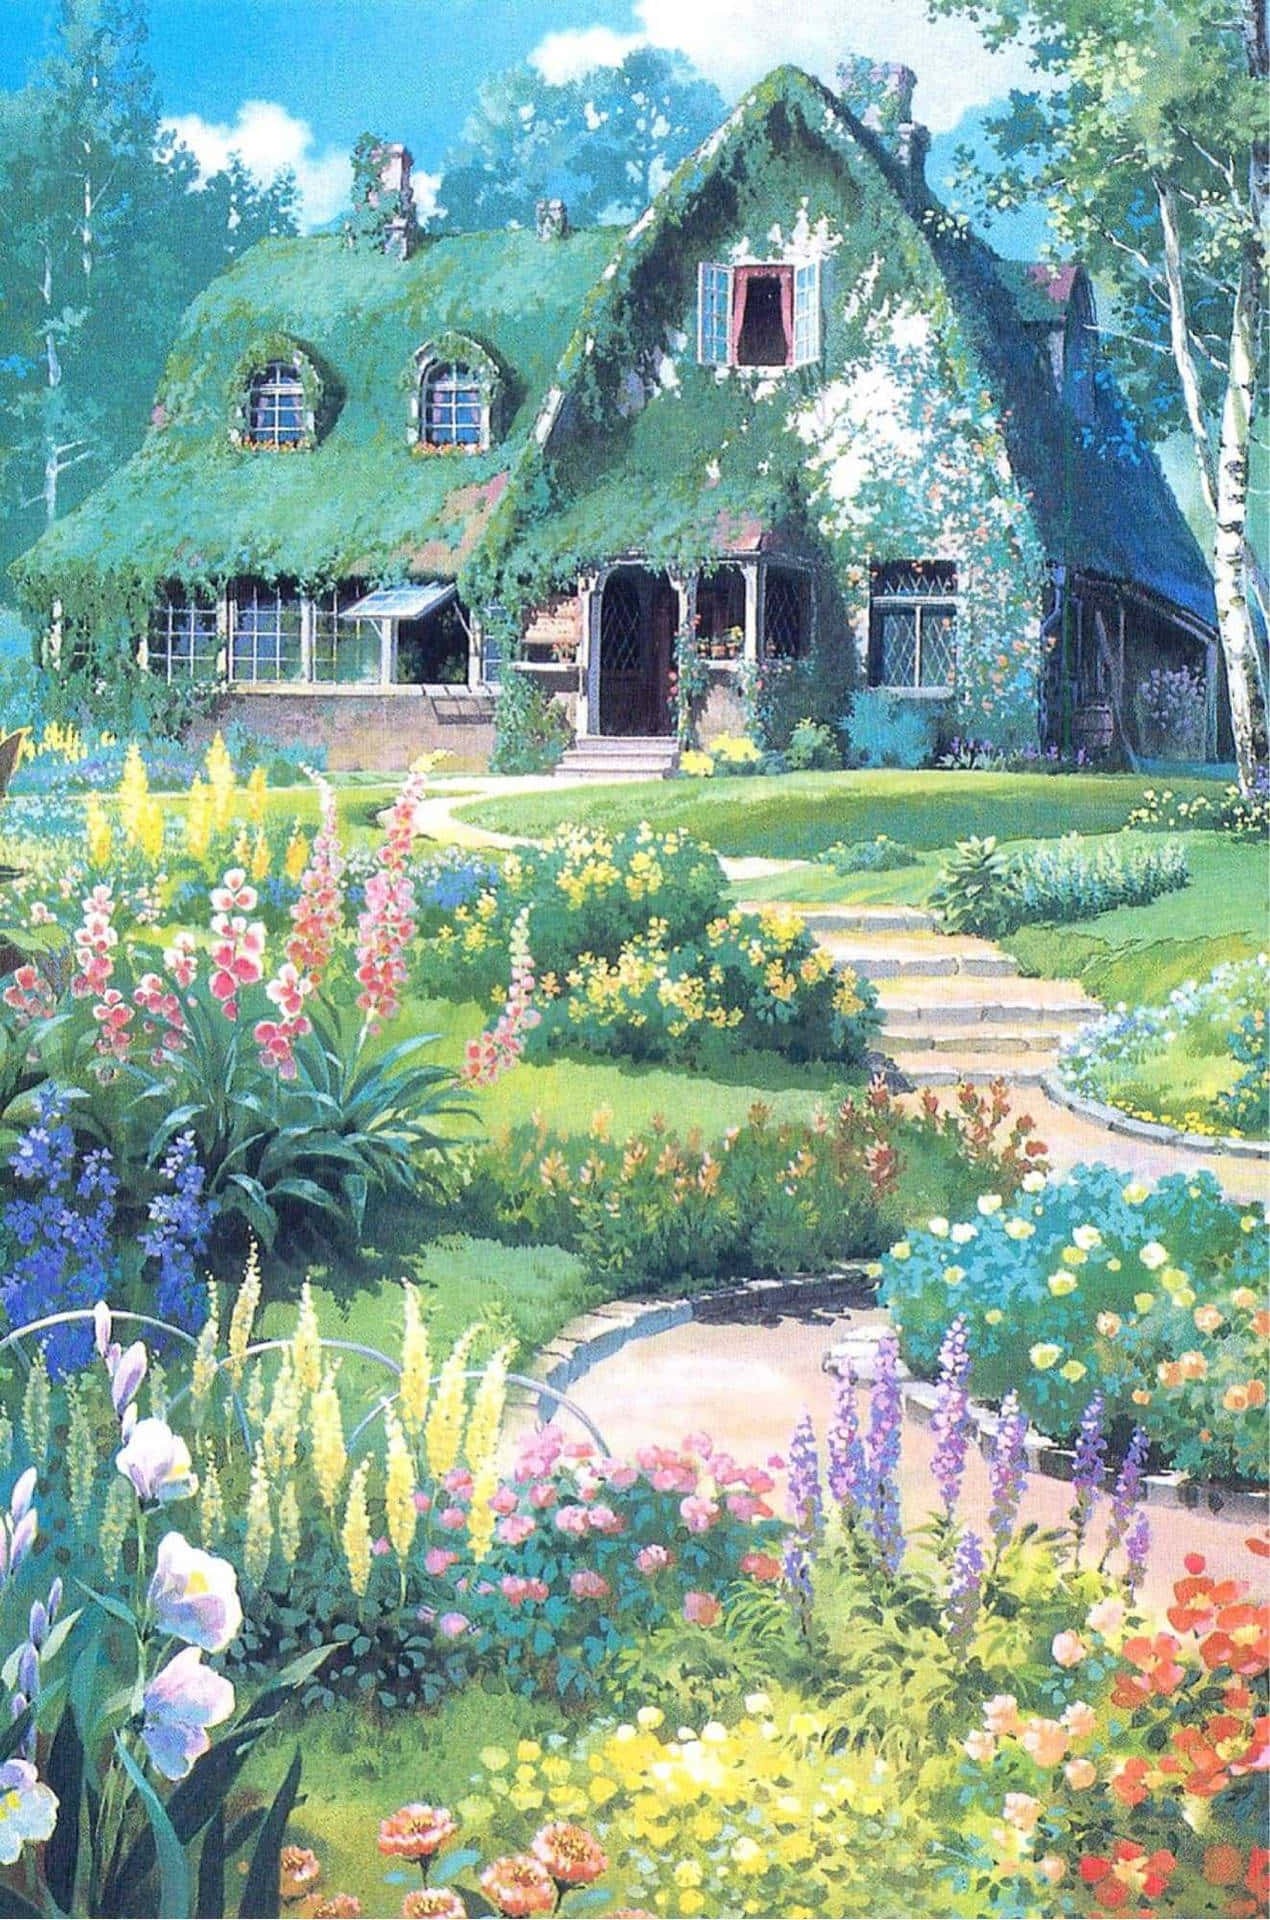 Enchanted Cottagecore Garden Wallpaper